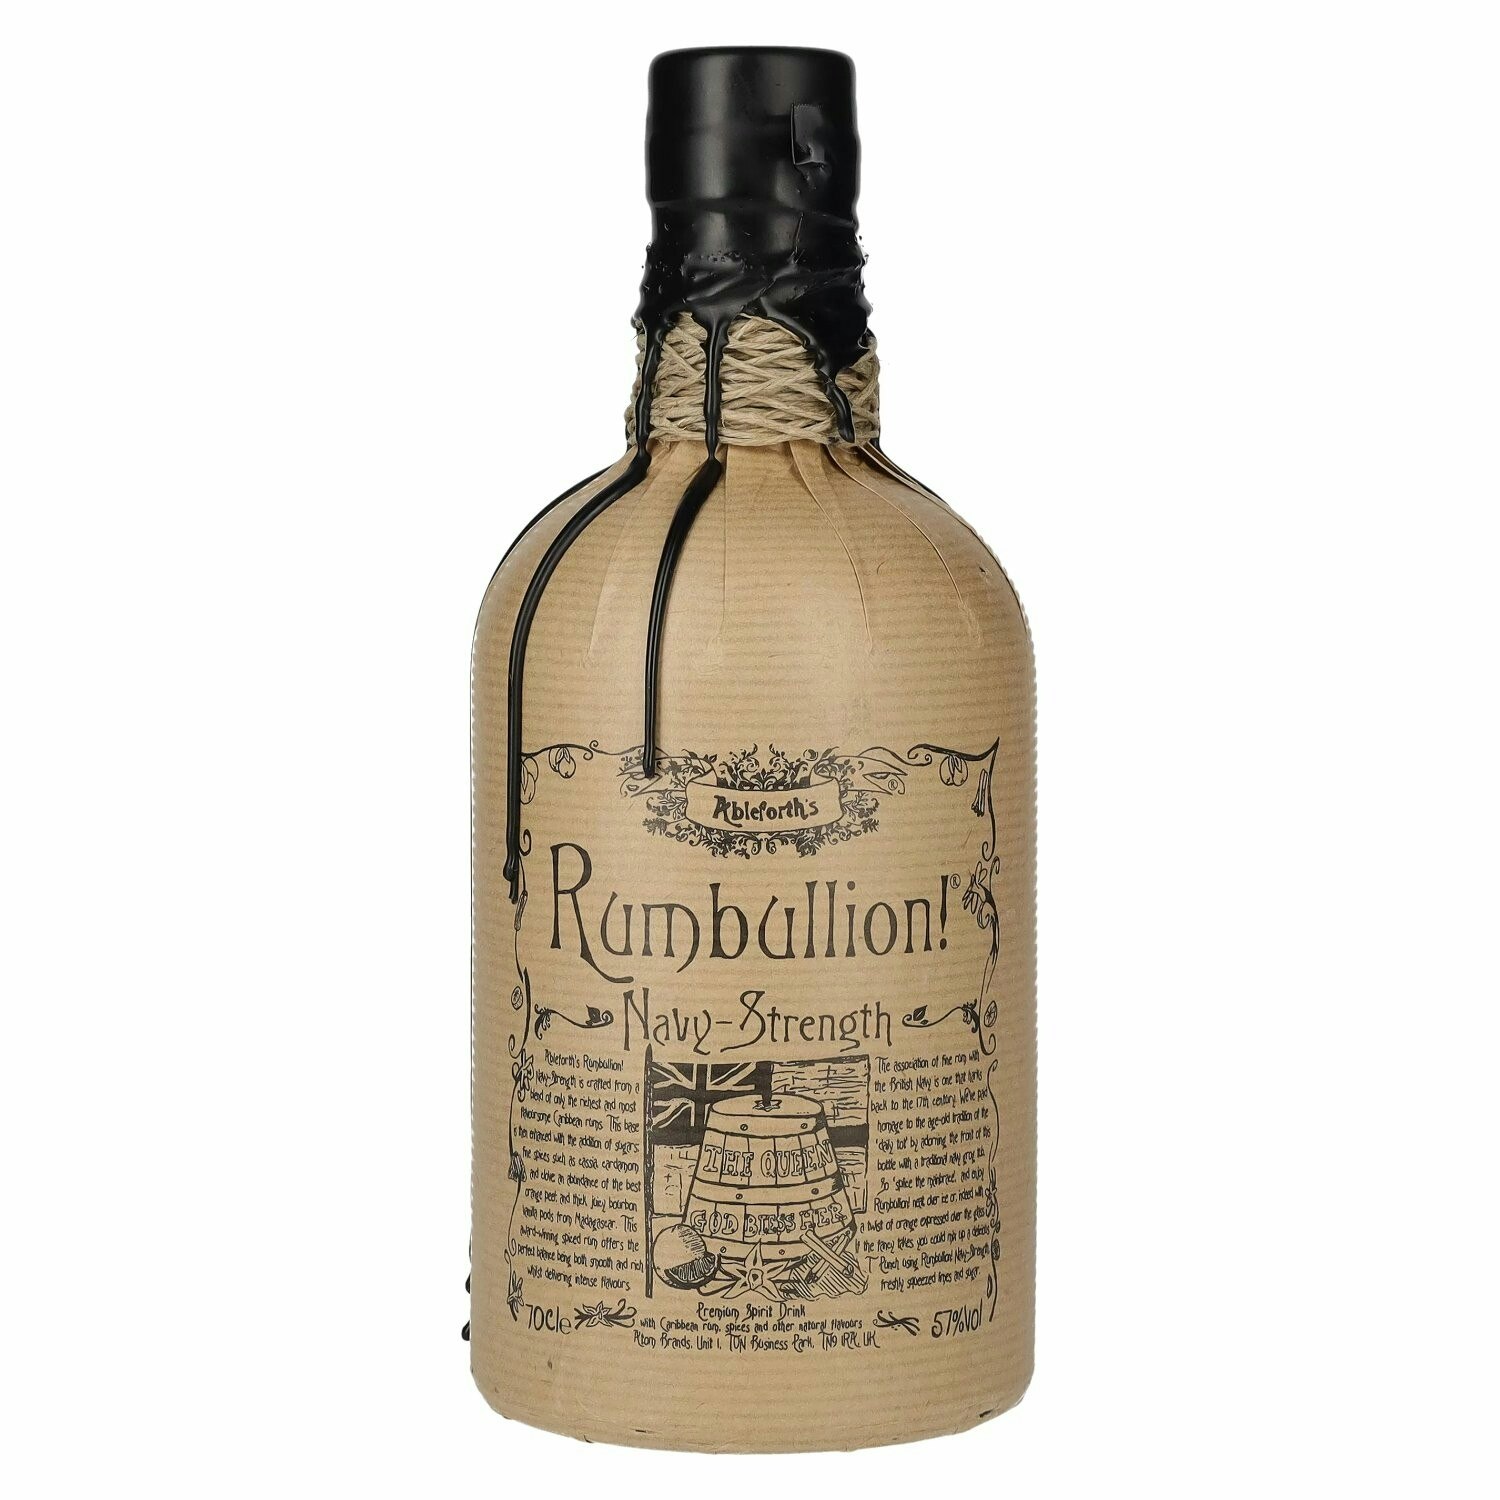 Ableforth's Rumbullion! Navy-Strength Premium Spirit Drink 57% Vol. 0,7l